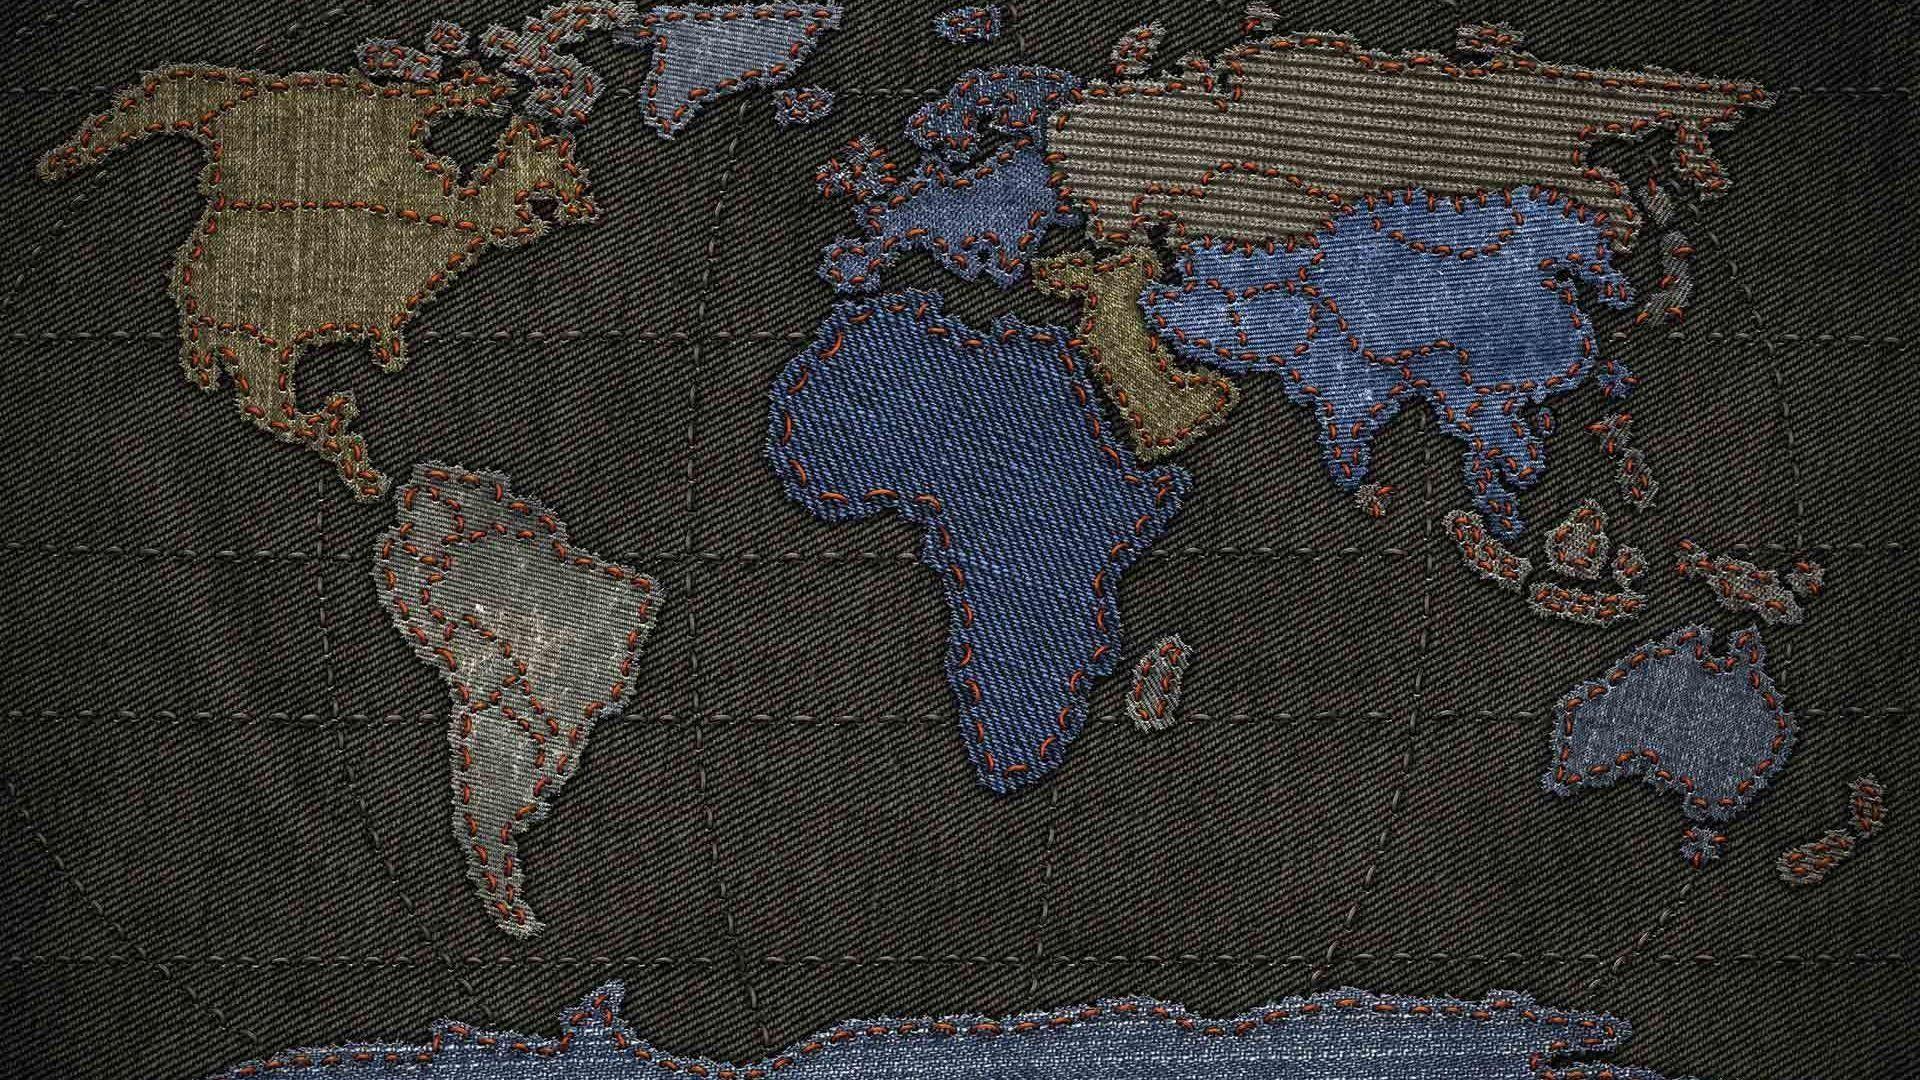 Geography cartography Mac Wallpaper Download. Free Mac Wallpaper